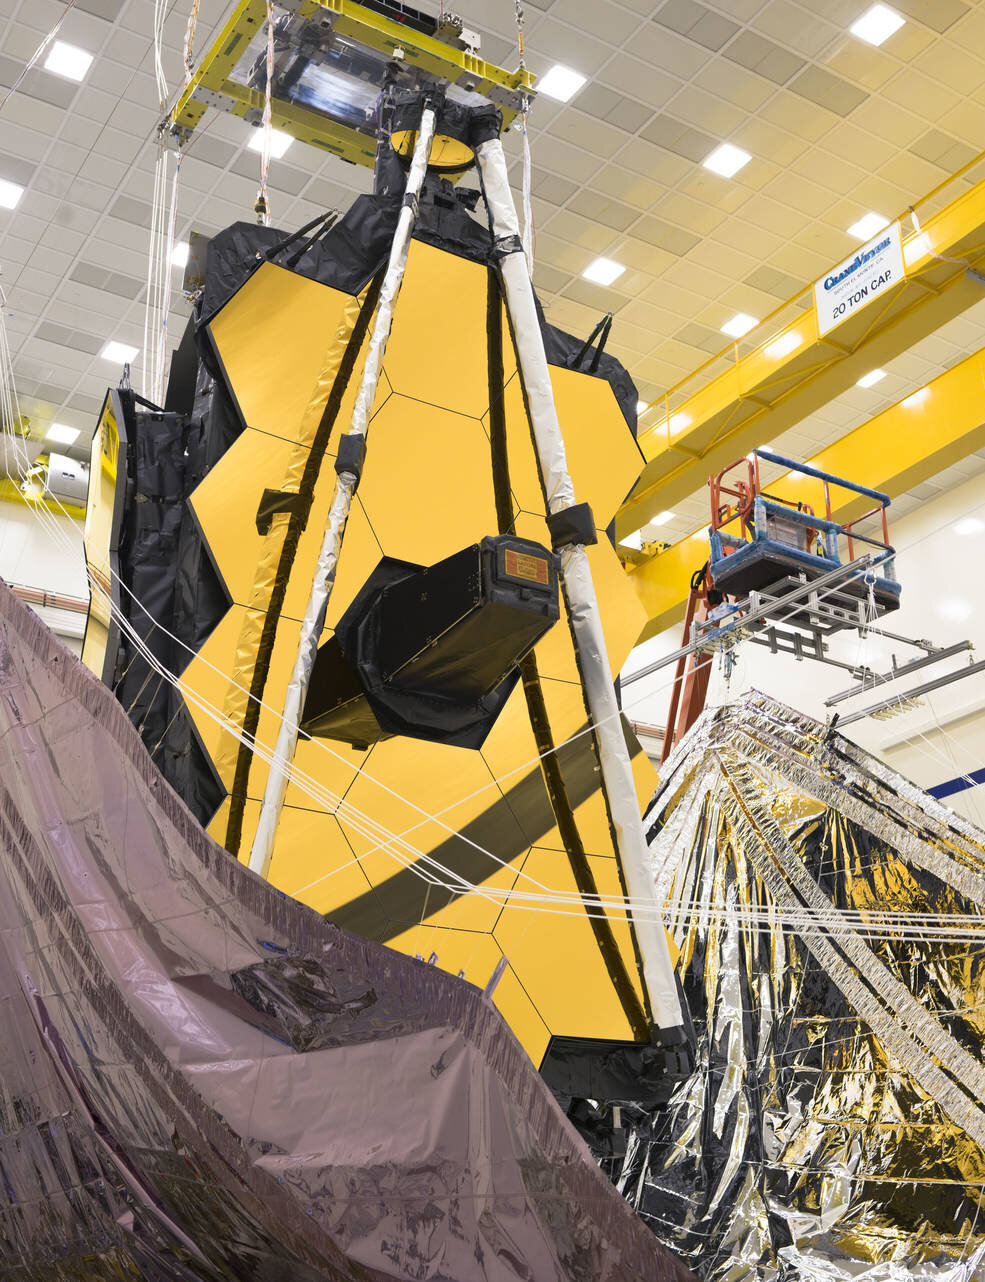 NASA’s Webb telescope is preparing its umbrella for a mile-long journey